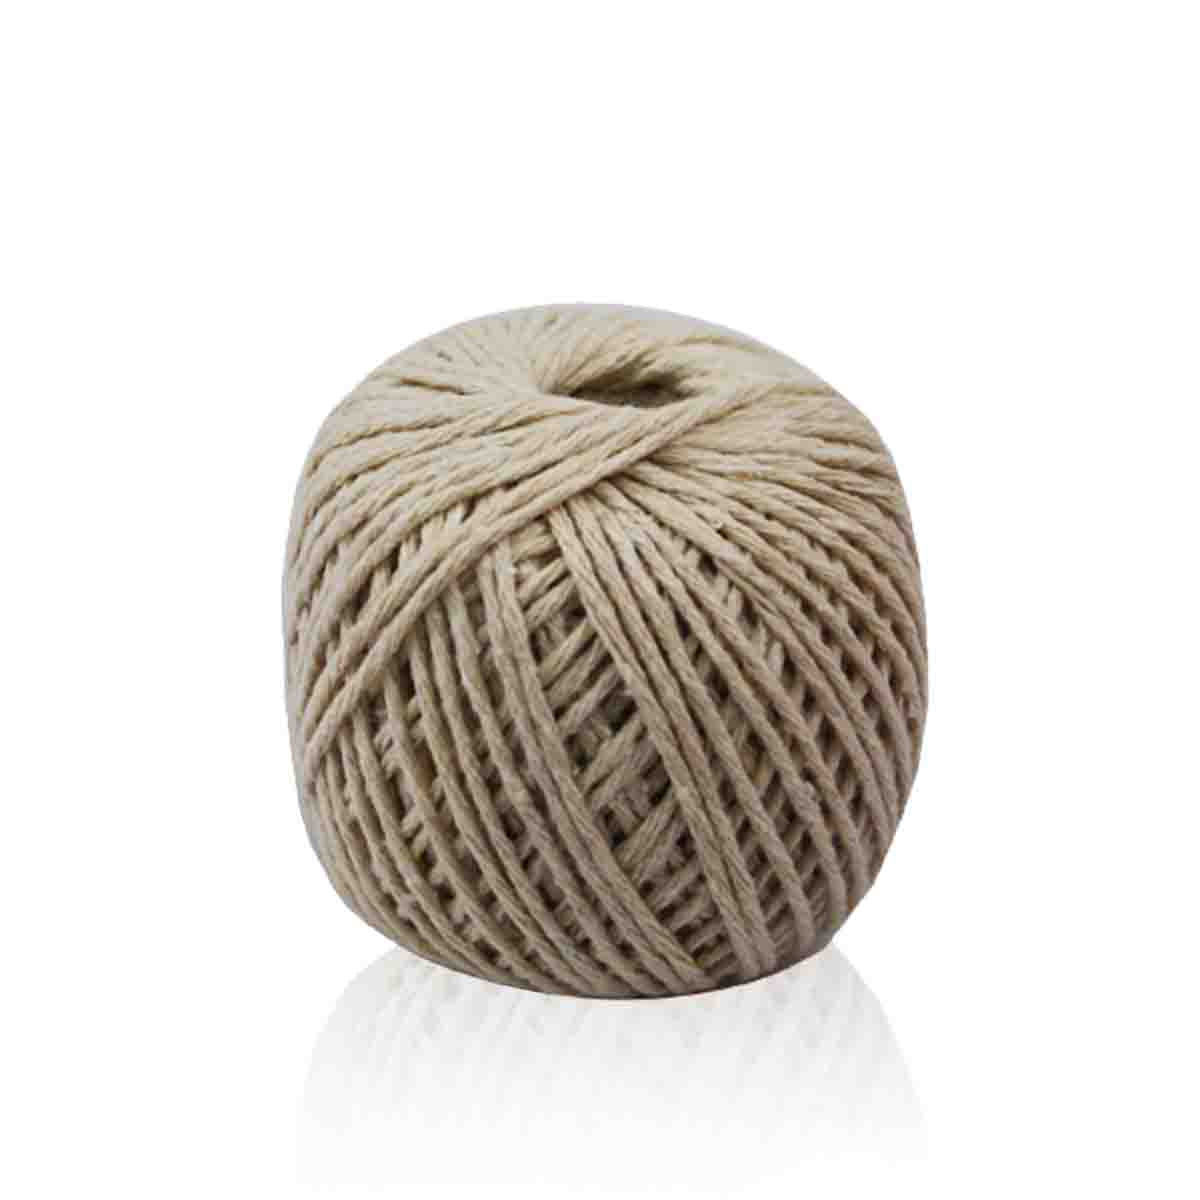 Shop Cotton Thread 50 gm -Tailoring Items online in Abu Dhabi, UAE